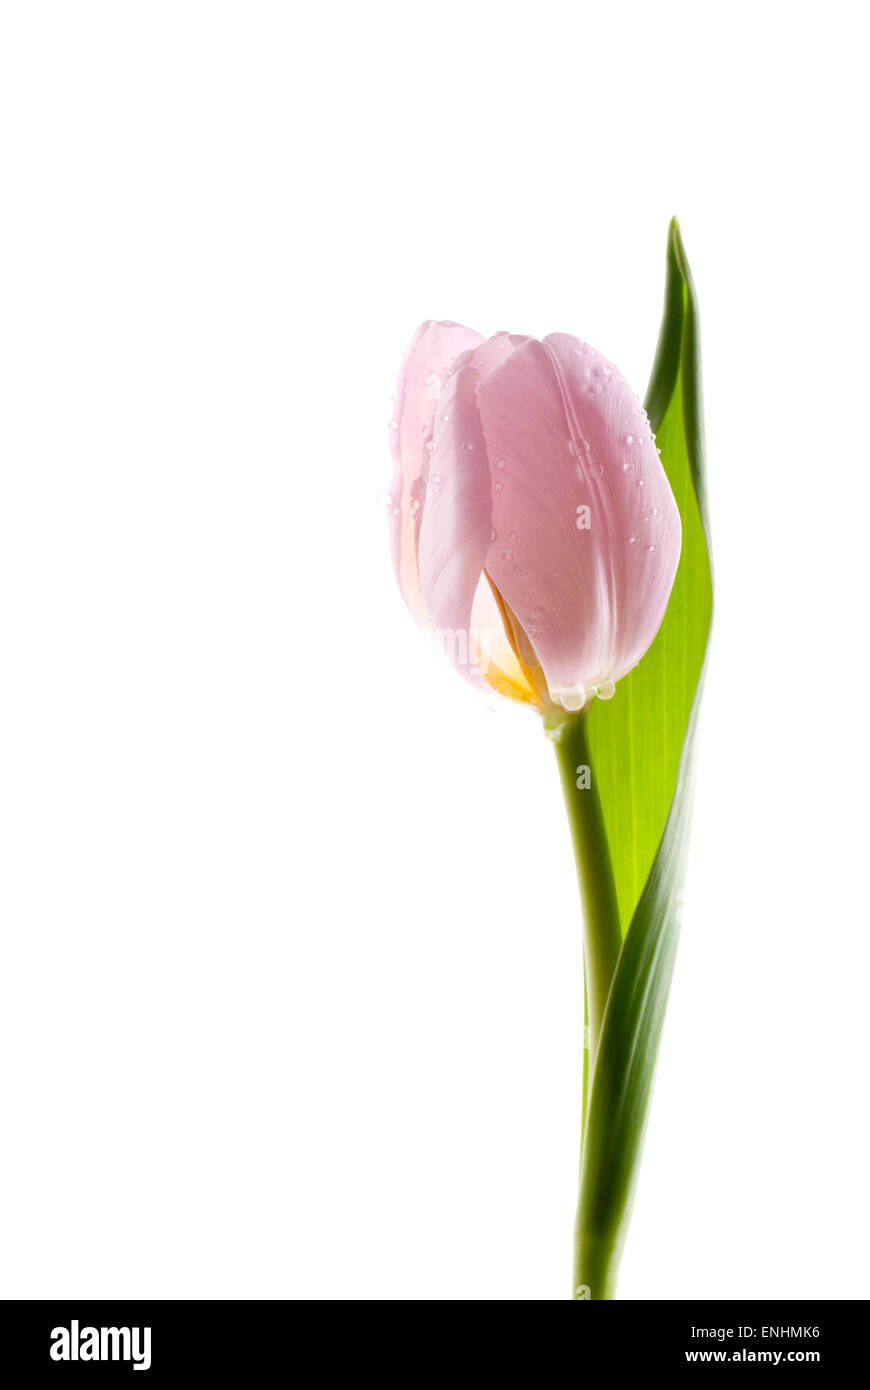 Pink tulip on white background. Stock Photo